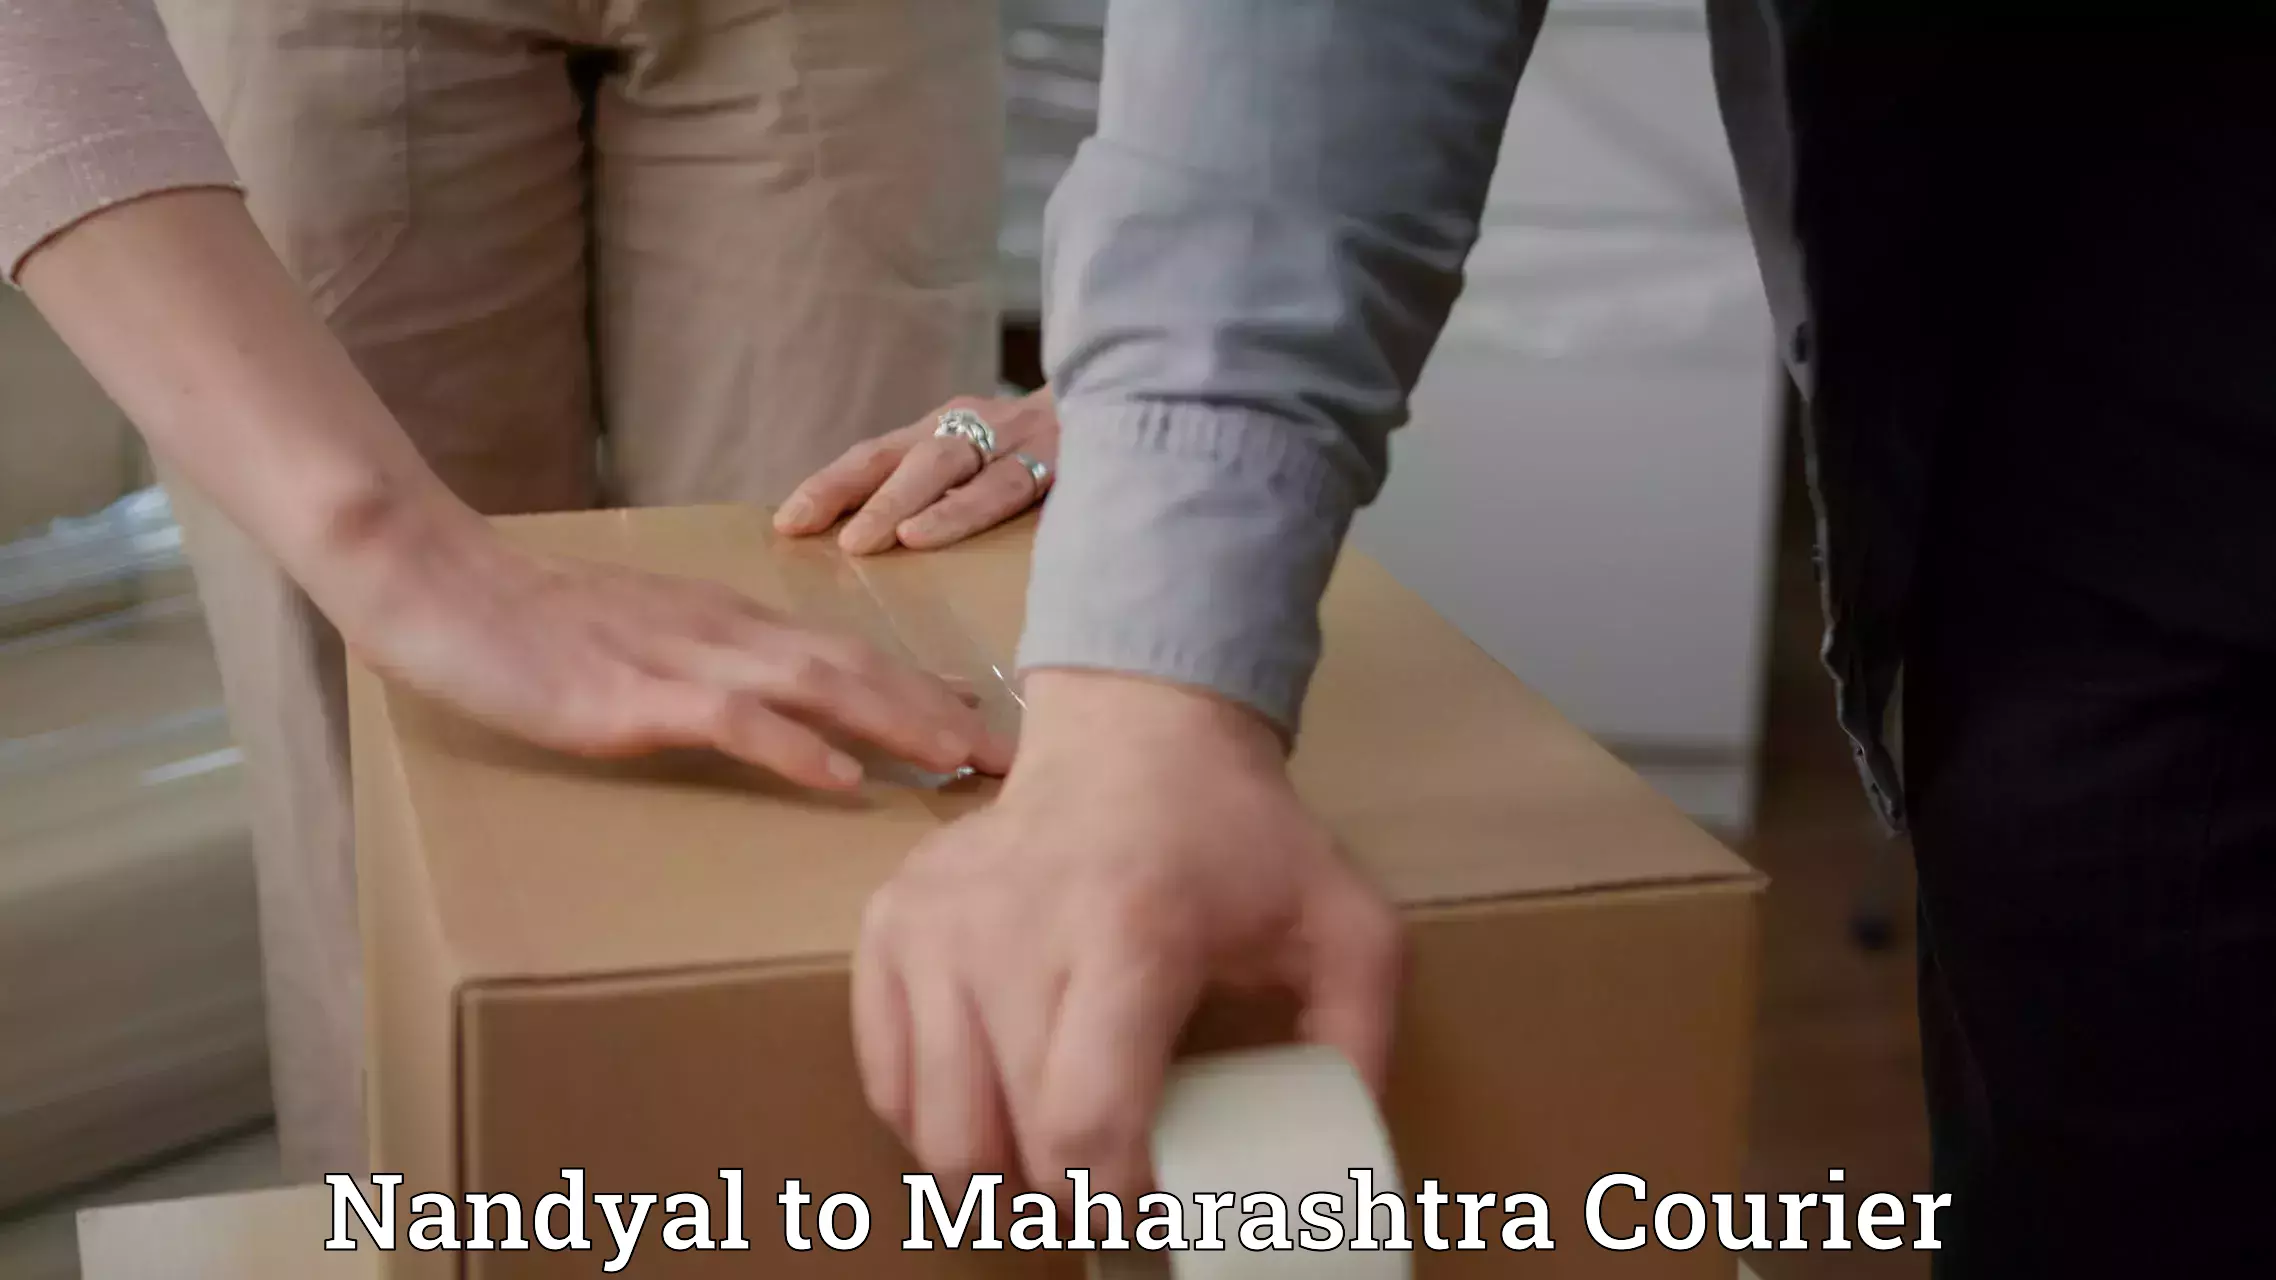 User-friendly delivery service Nandyal to Maharashtra